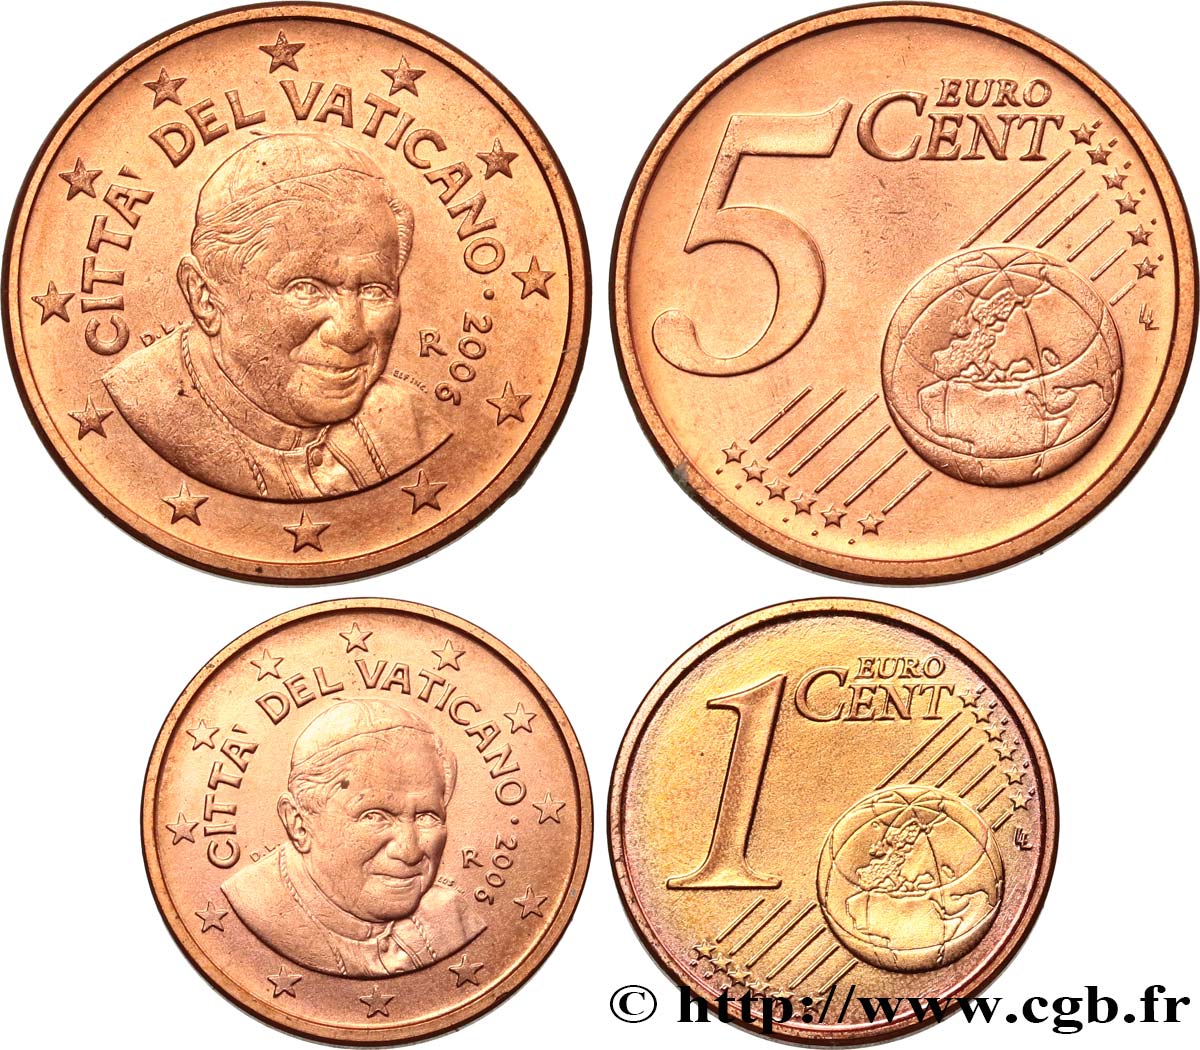 VATIKAN 1 cent et 5 cent Benoît XVI 2006